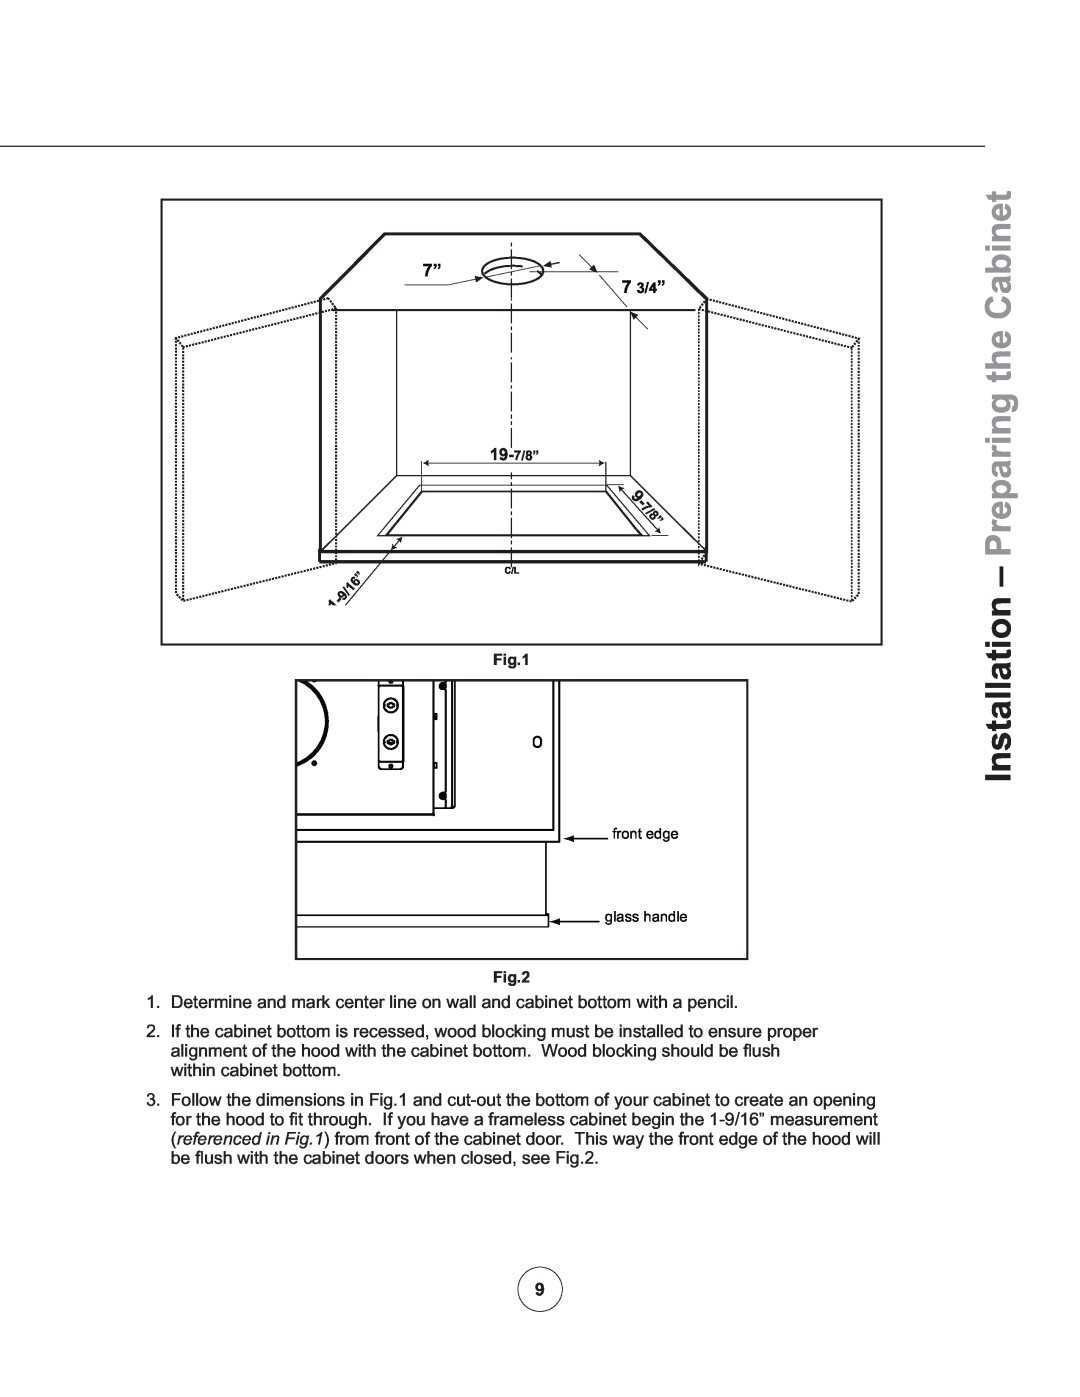 Zephyr ZGE-E36AS290, ZGE-E30AS290 manual Installation - Preparing the Cabinet, 7 3/4” 